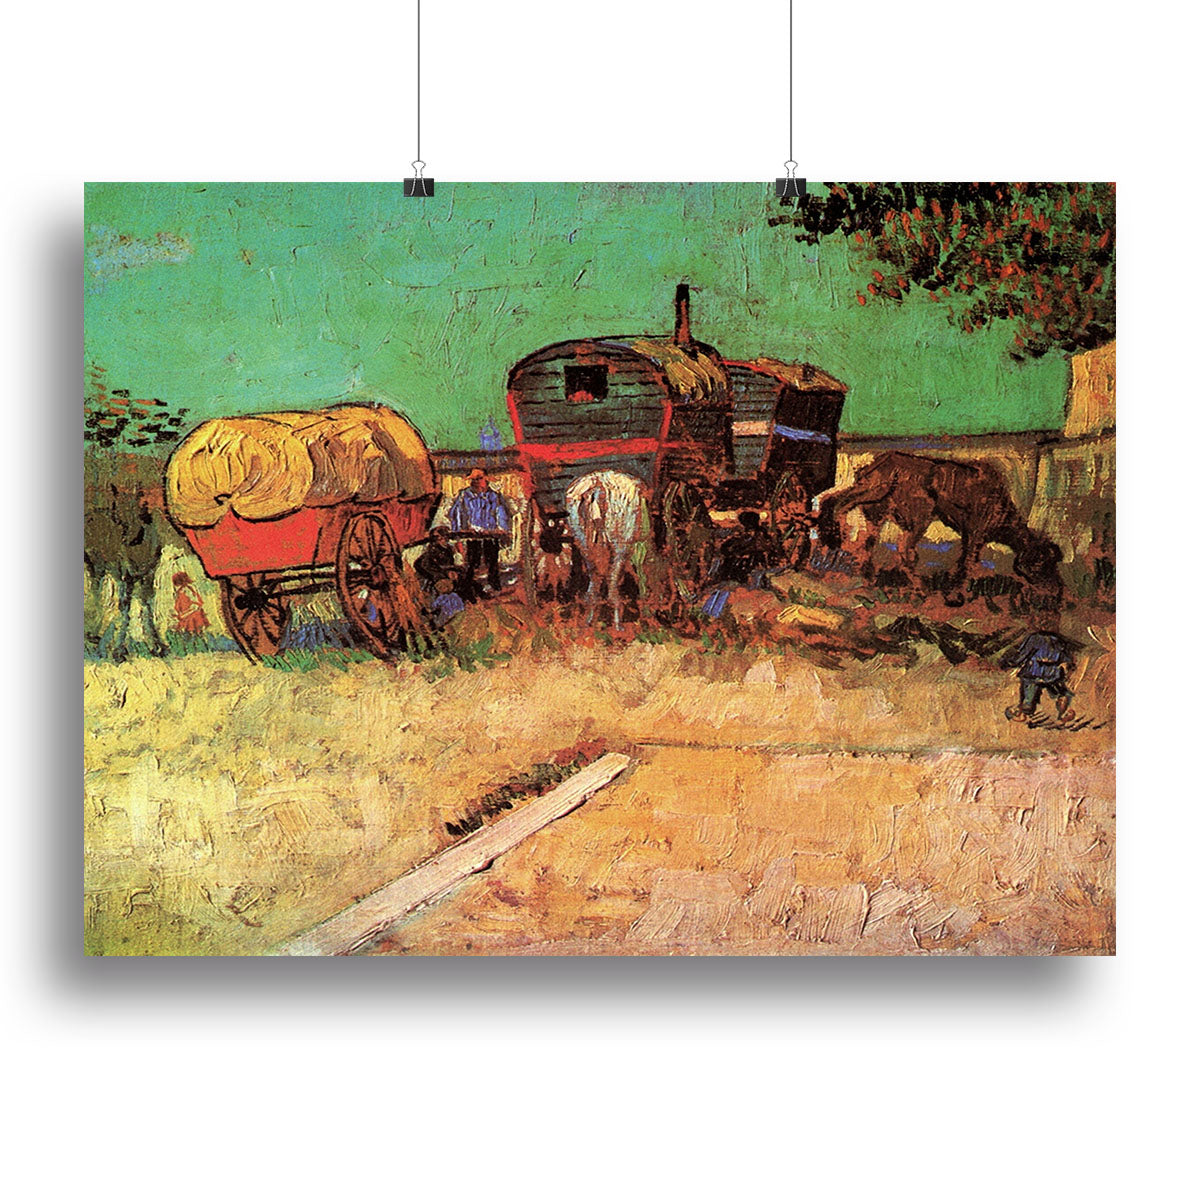 Encampment of Gypsies with Caravans by Van Gogh Canvas Print or Poster - Canvas Art Rocks - 2